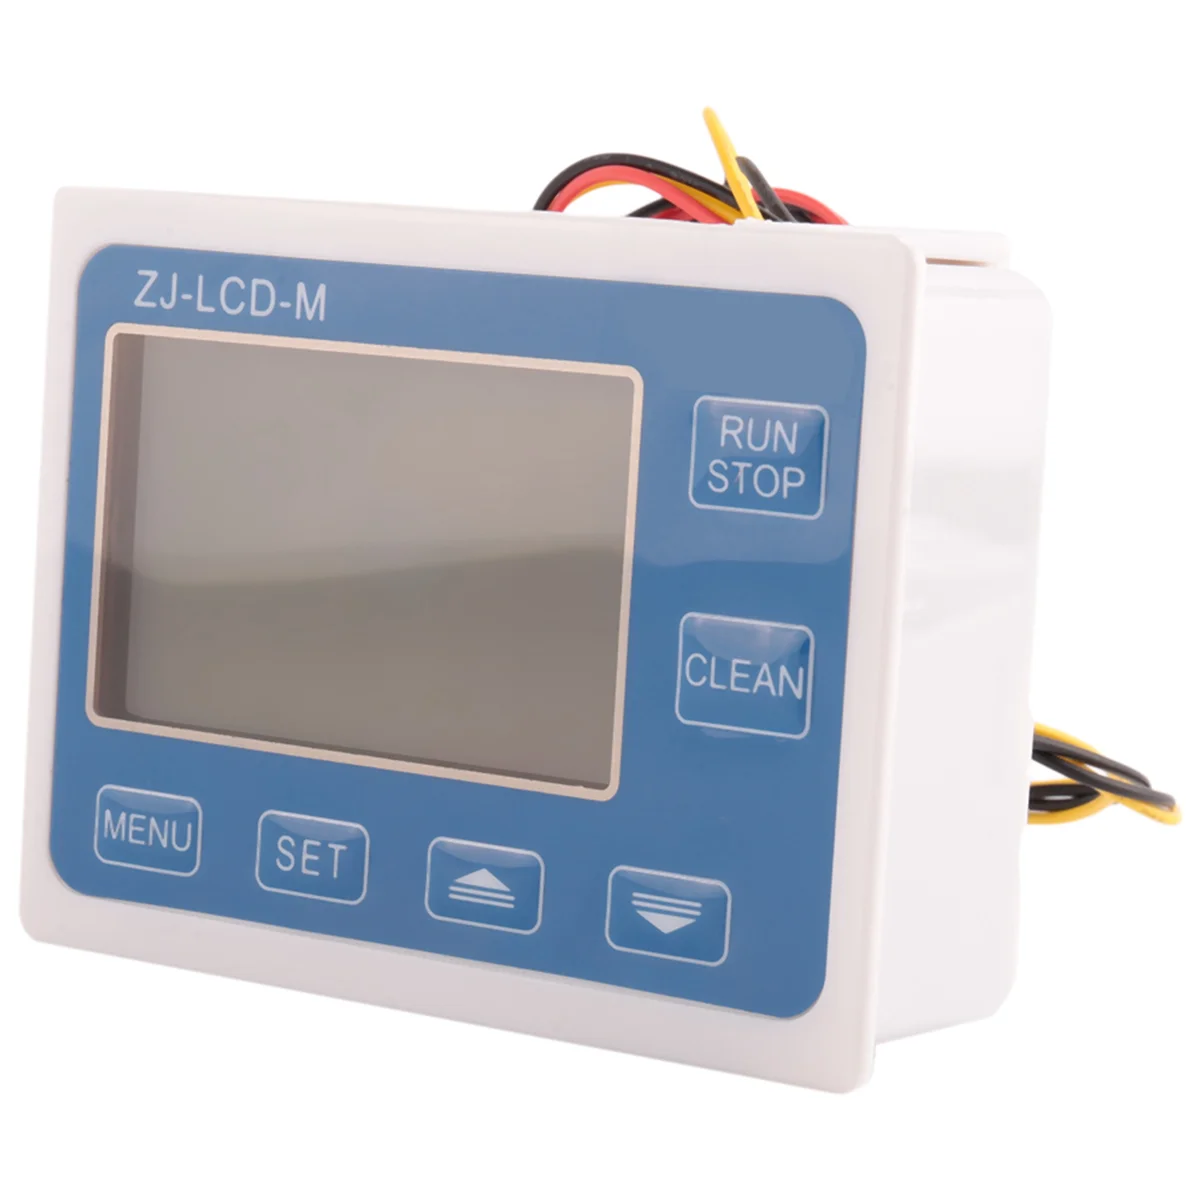 

Control Flow Sensor Meter Lcd Display Zj-Lcd-M Screen For Flow Sensor Flow